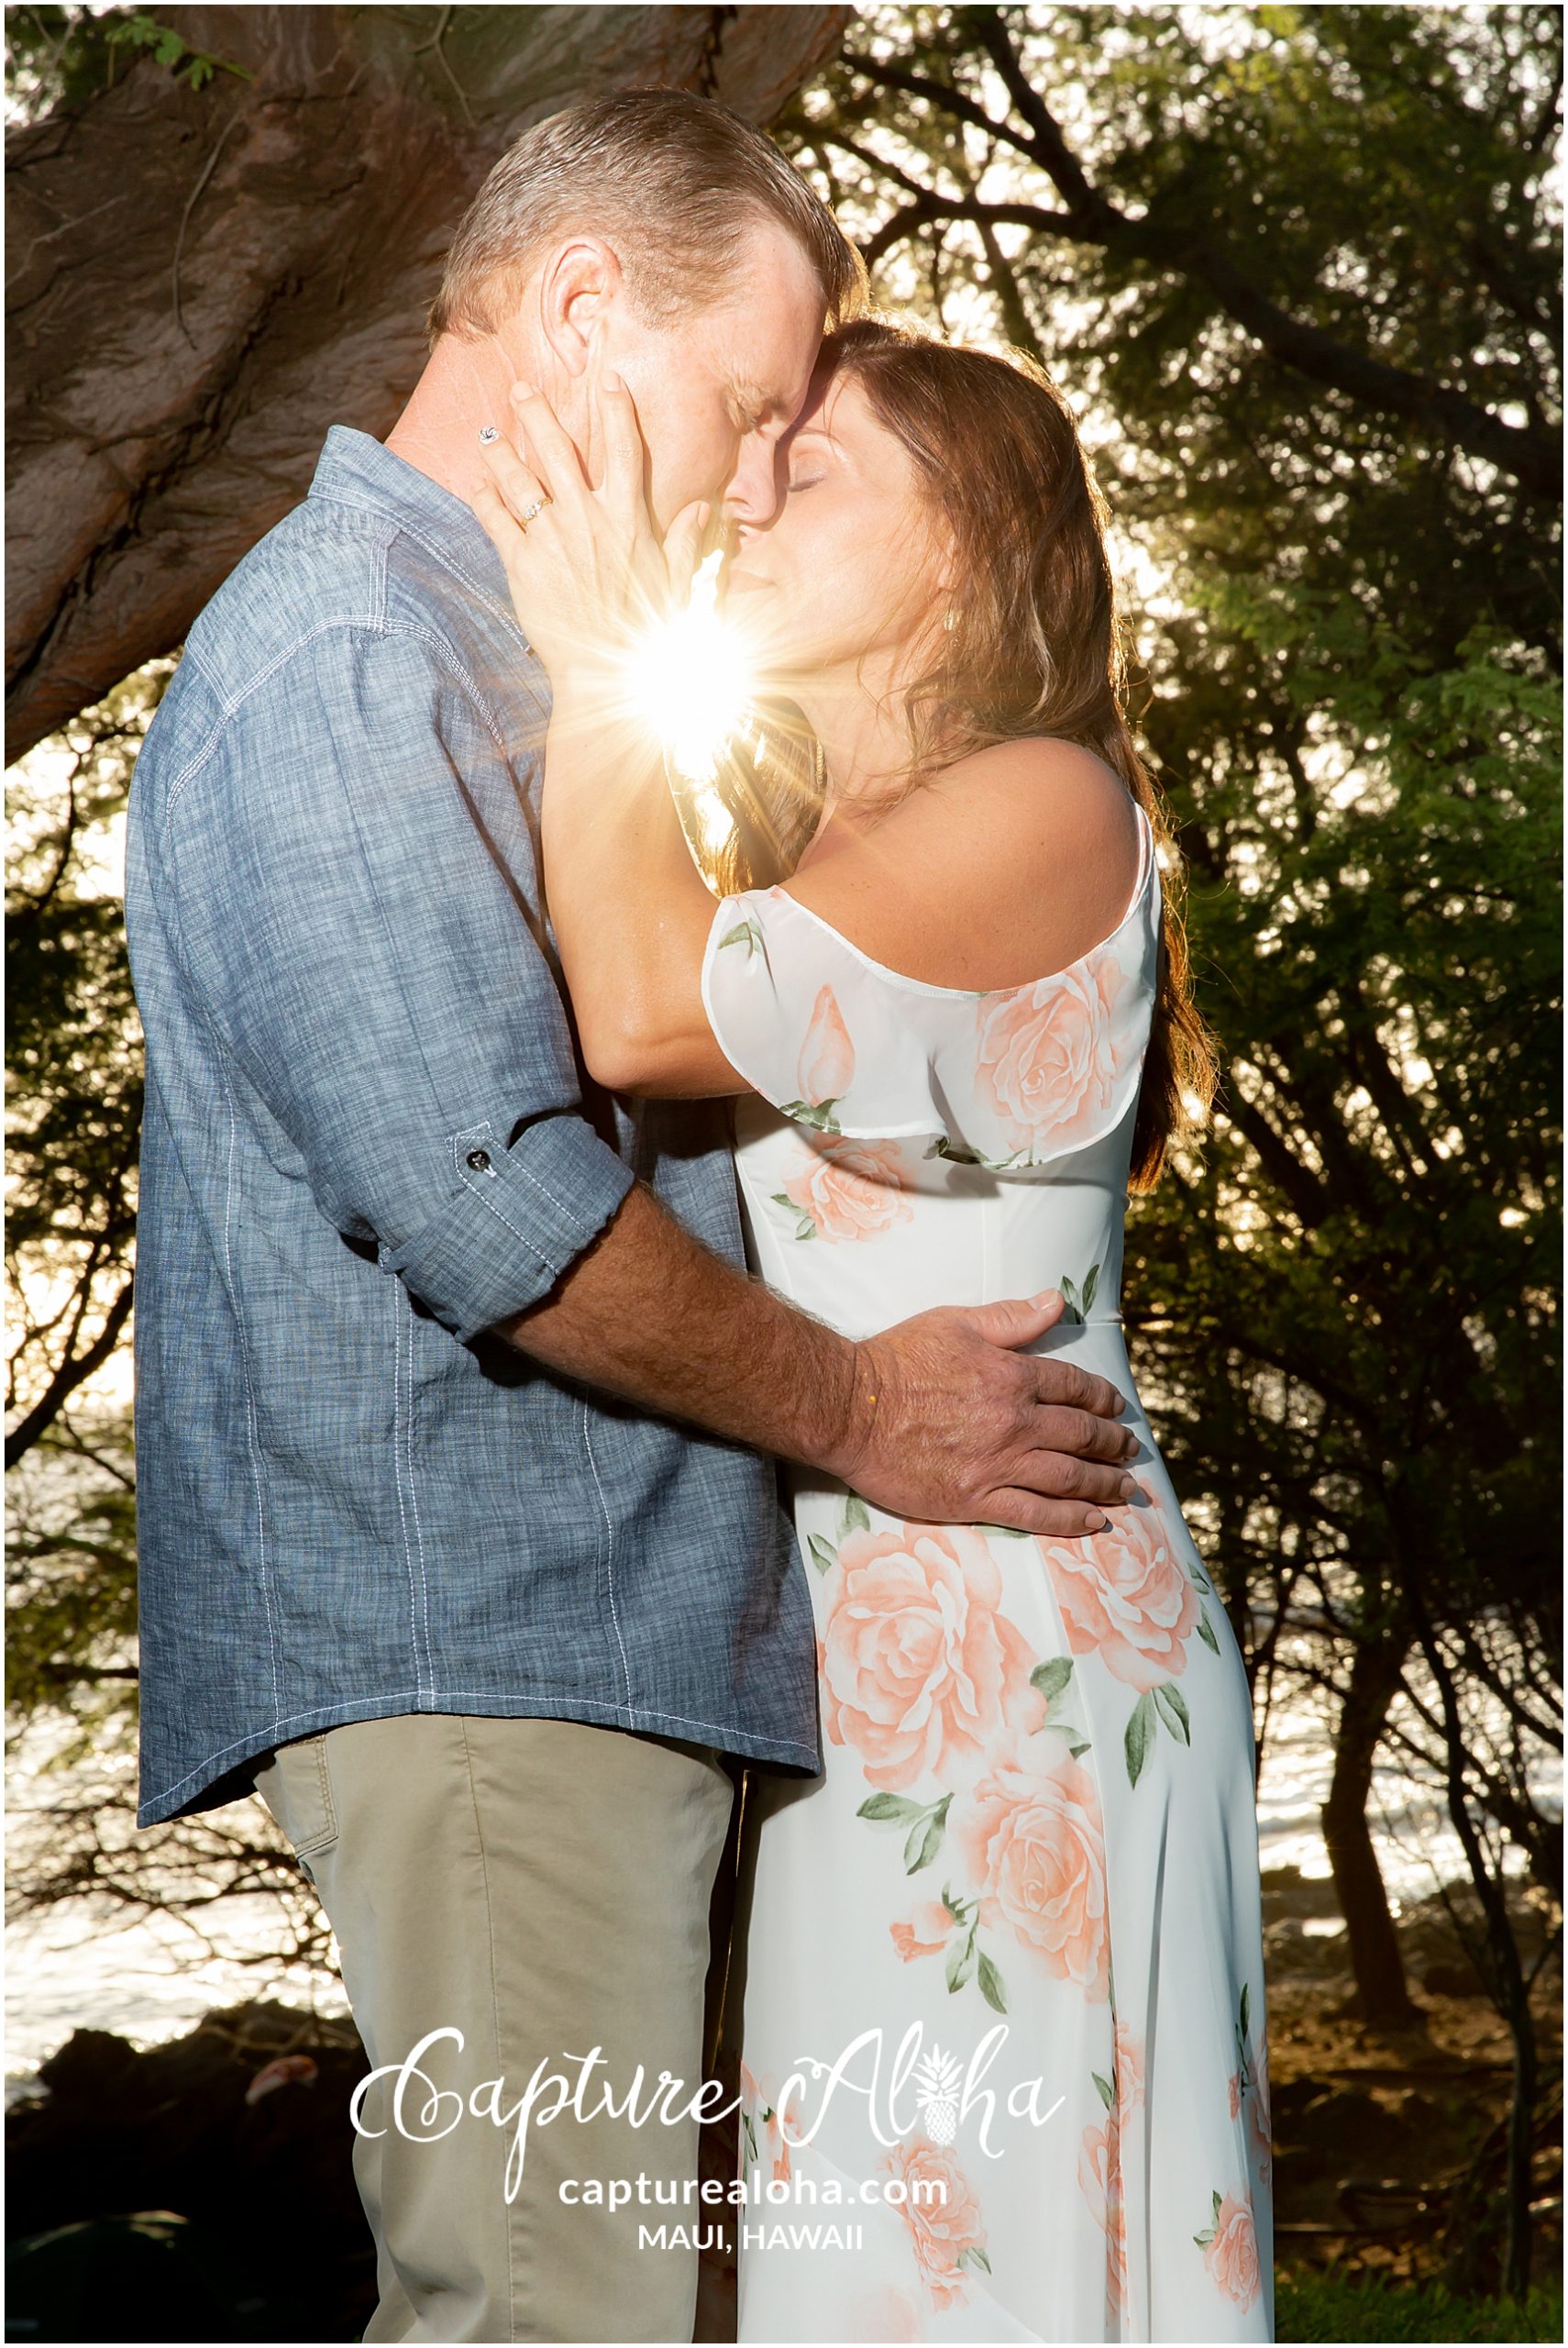 Maui Couples Photography at Mokapu Beach, Maui before sunset with couple kissing